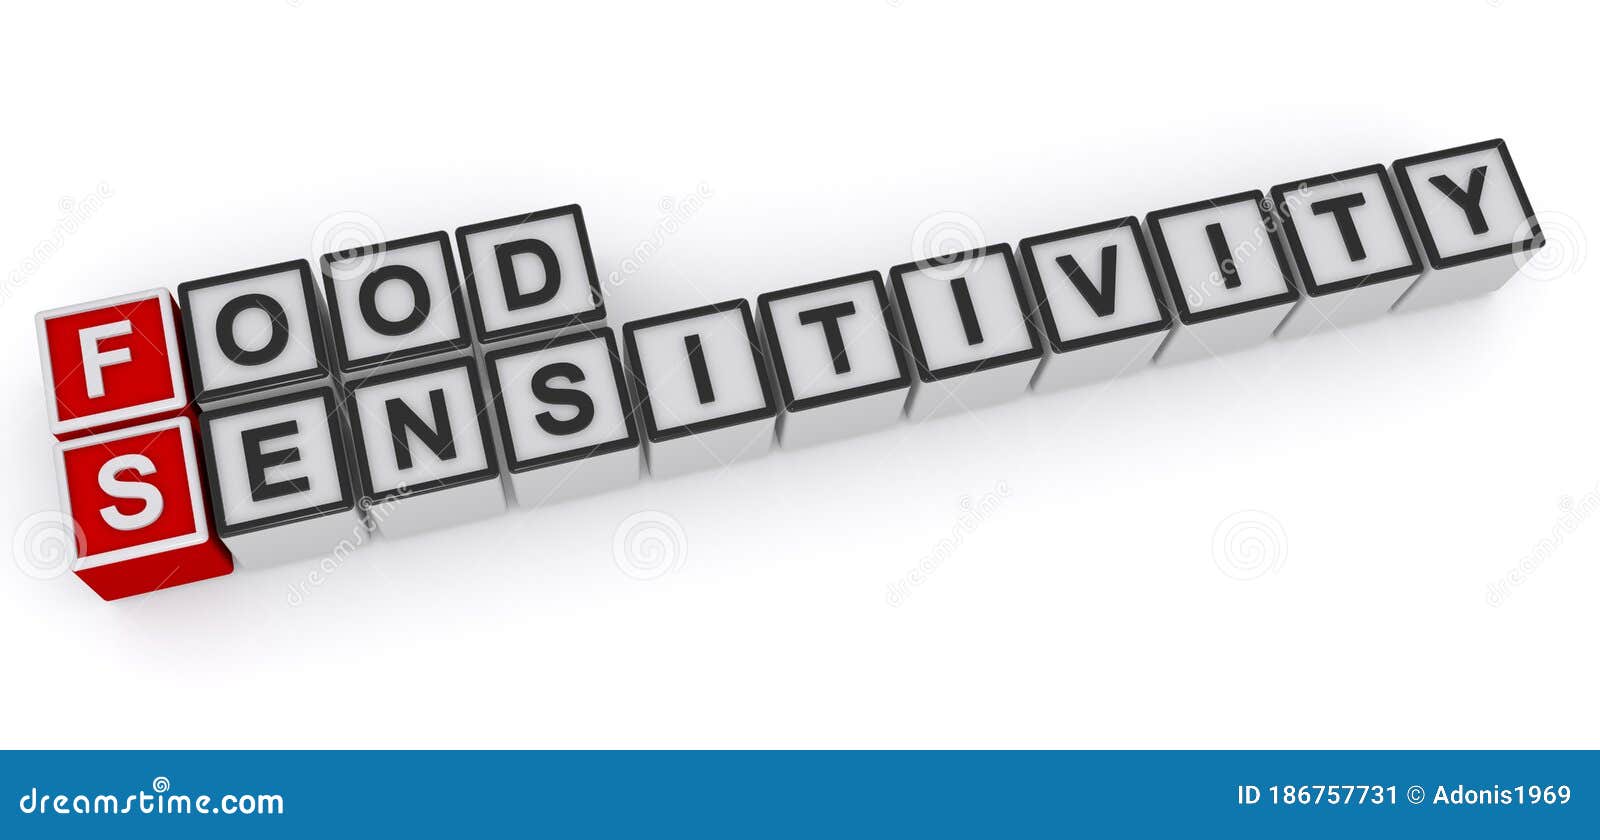 food sensitivity word blocks